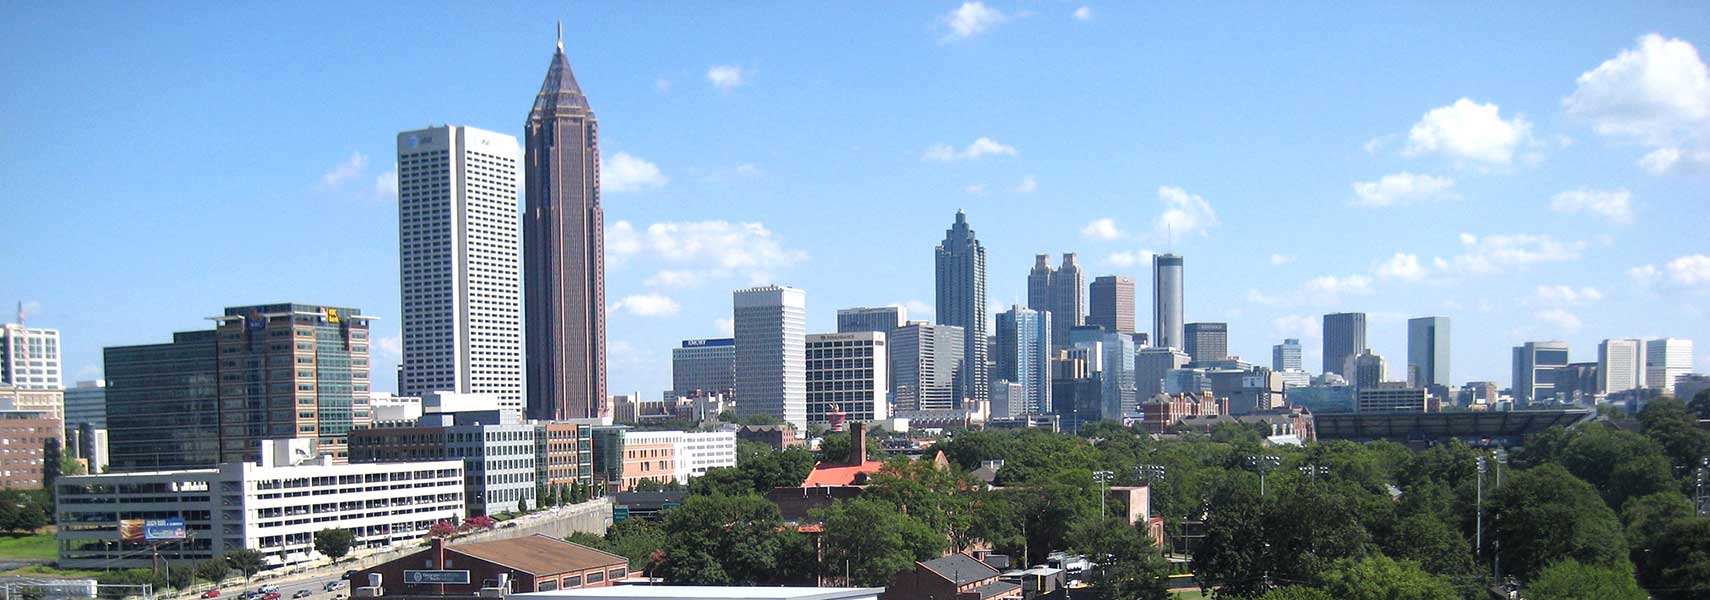 Skyline of Atlanta, Georgia, USA